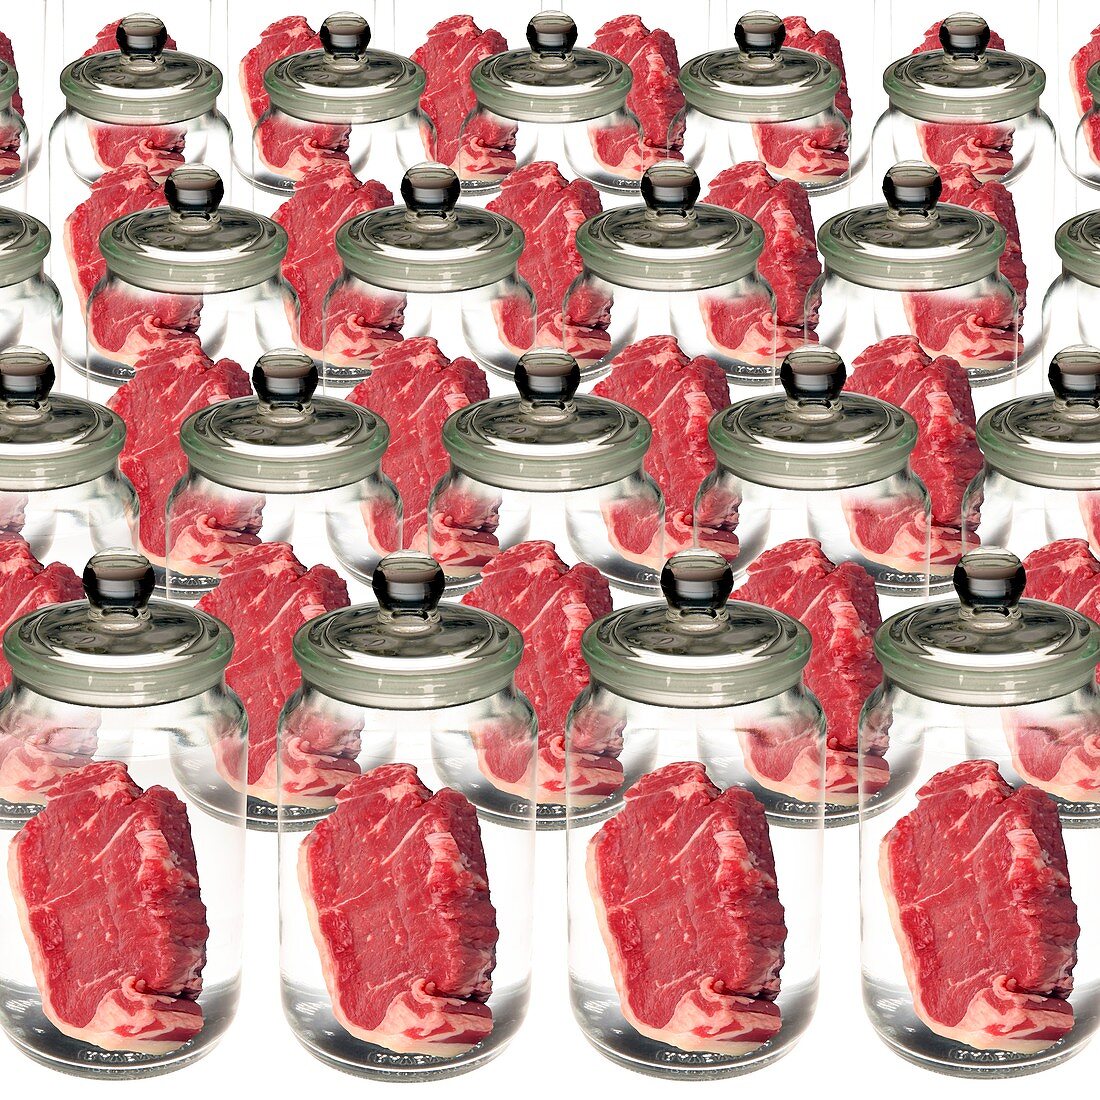 Artificial meat,conceptual image